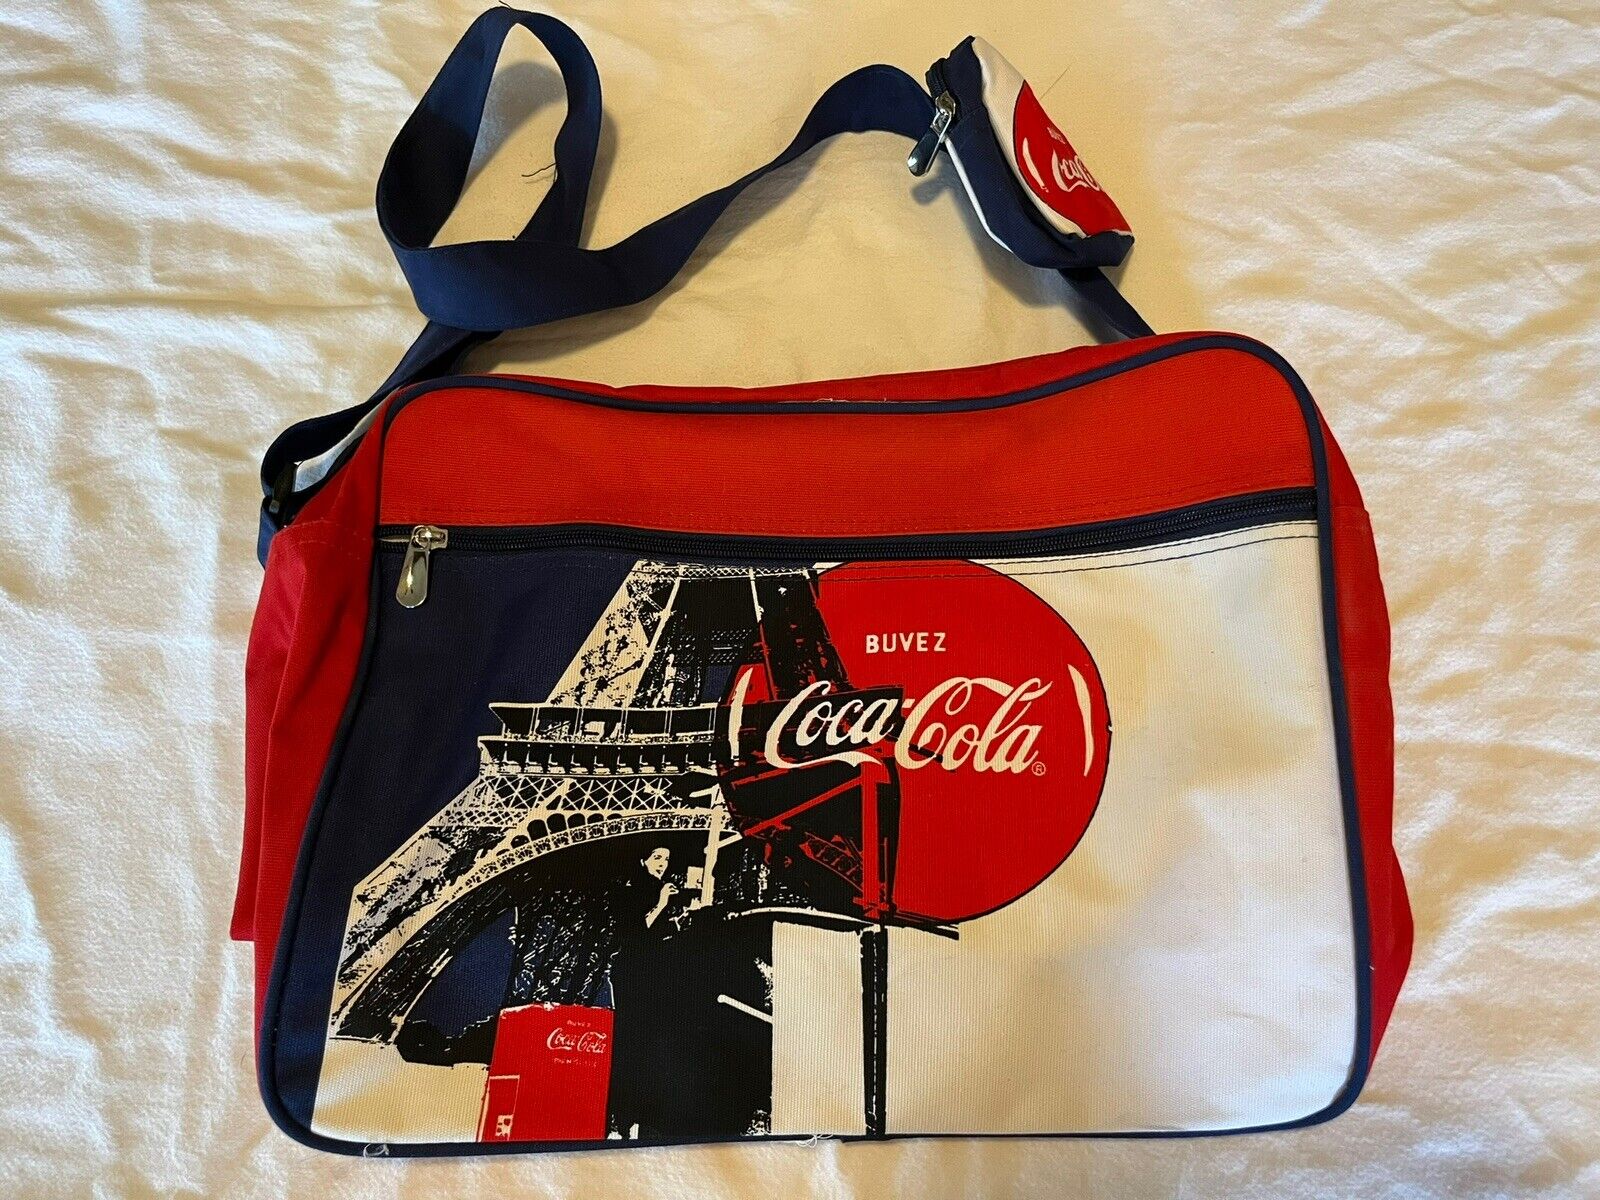 Vintage Coca Cola Duffle Bag For Gym Or Travel